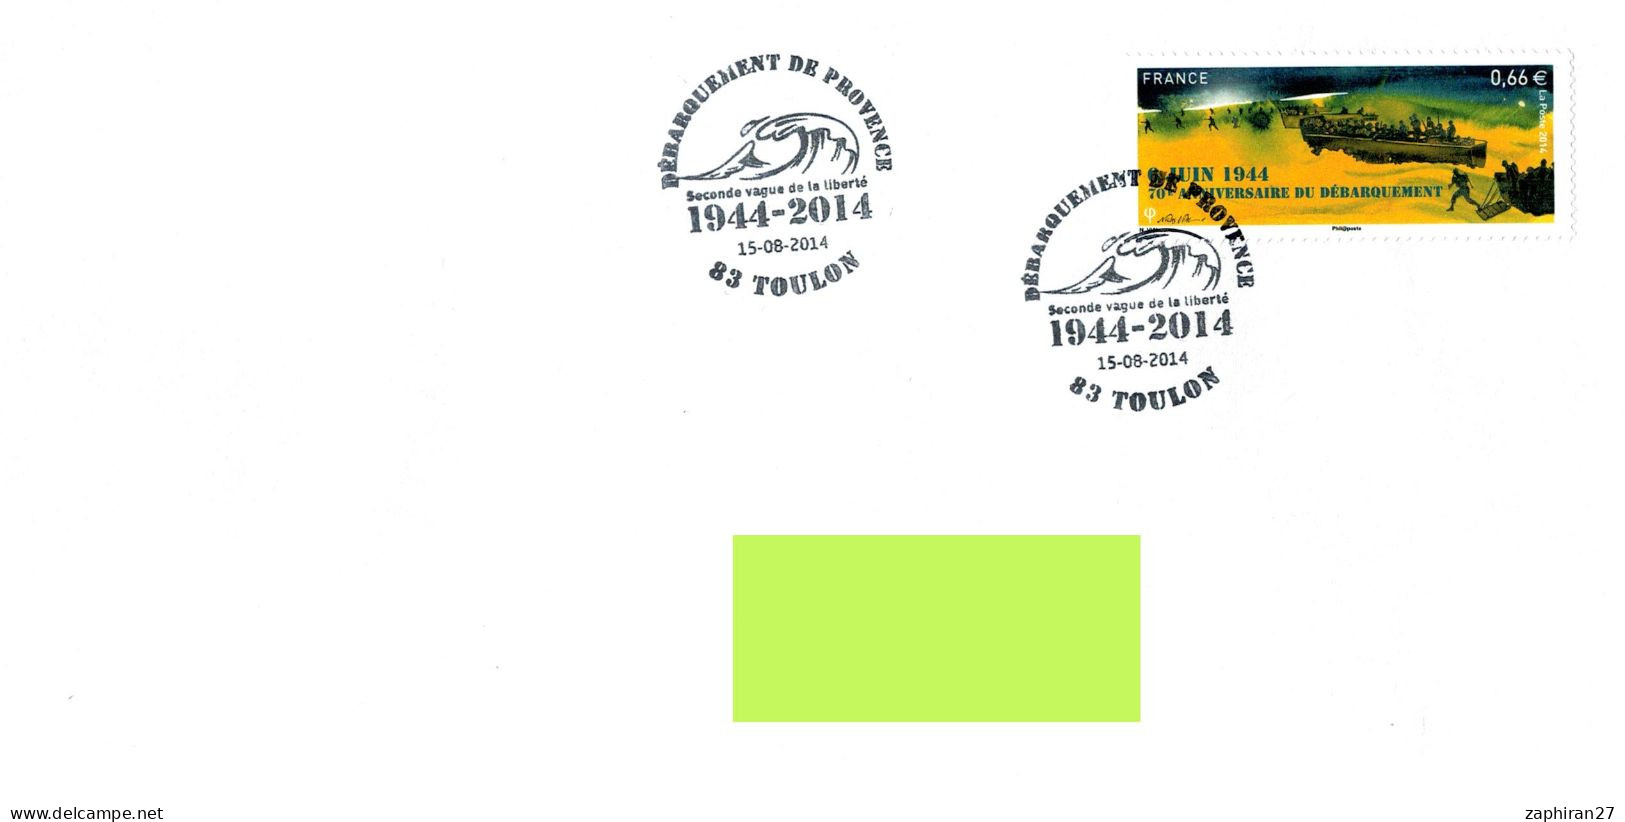 83 -  TOULON (VAR) DEBARQUEMENT EN PROVENCE 1944-2014 SECONDE VAGUE DE LA LIBERTE 15-8-2014 #1005# - WW2